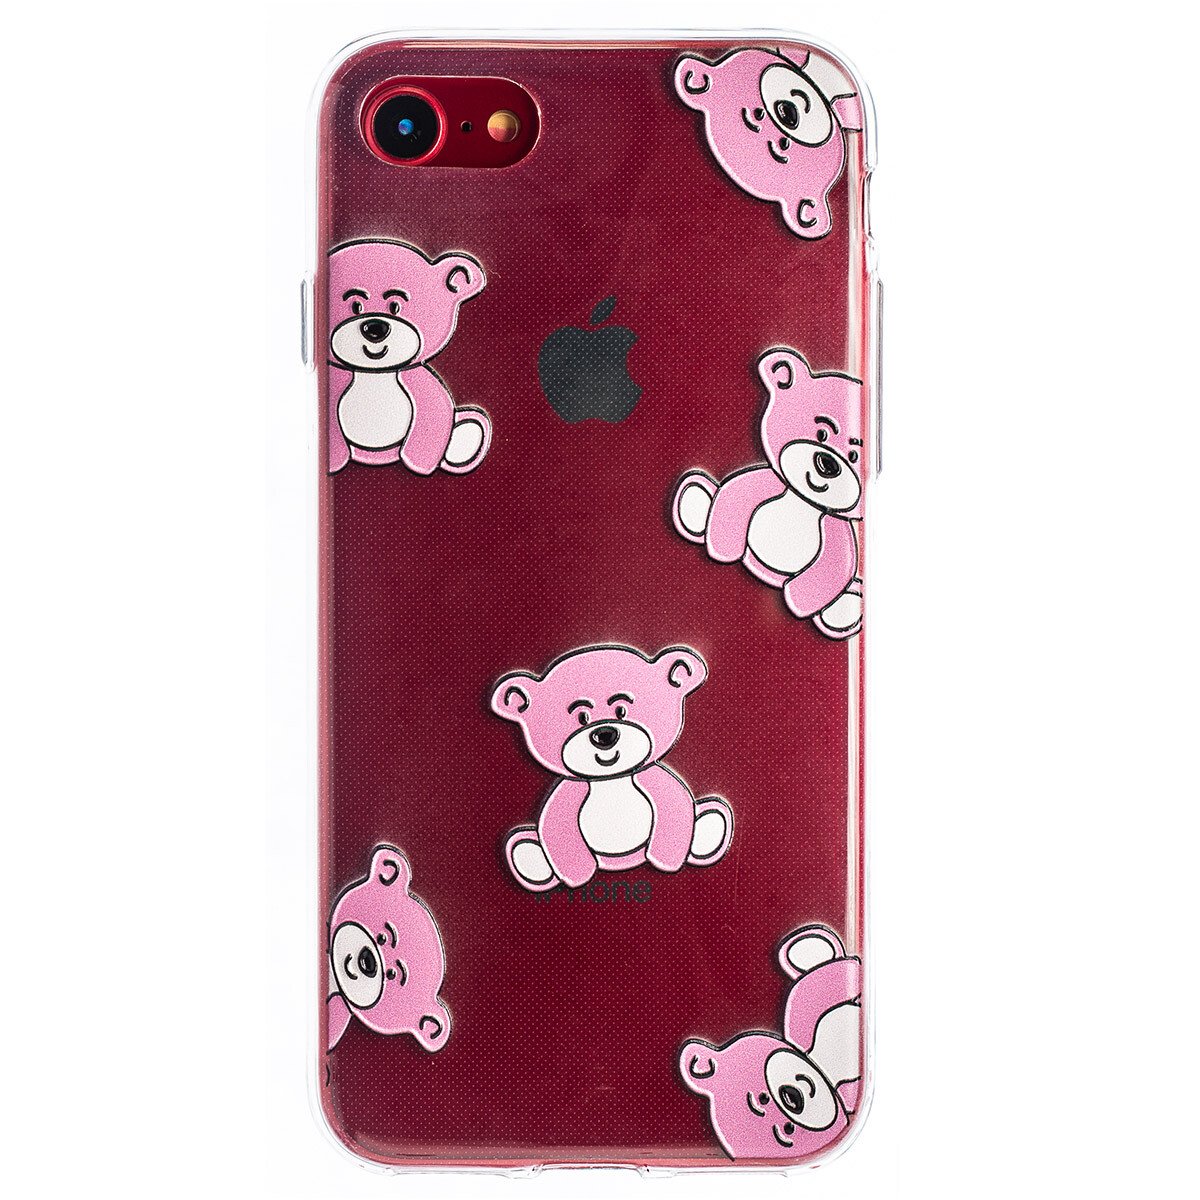 Husa Fashion iPhone 7/8/SE 2 Negru, Pink Bears thumb